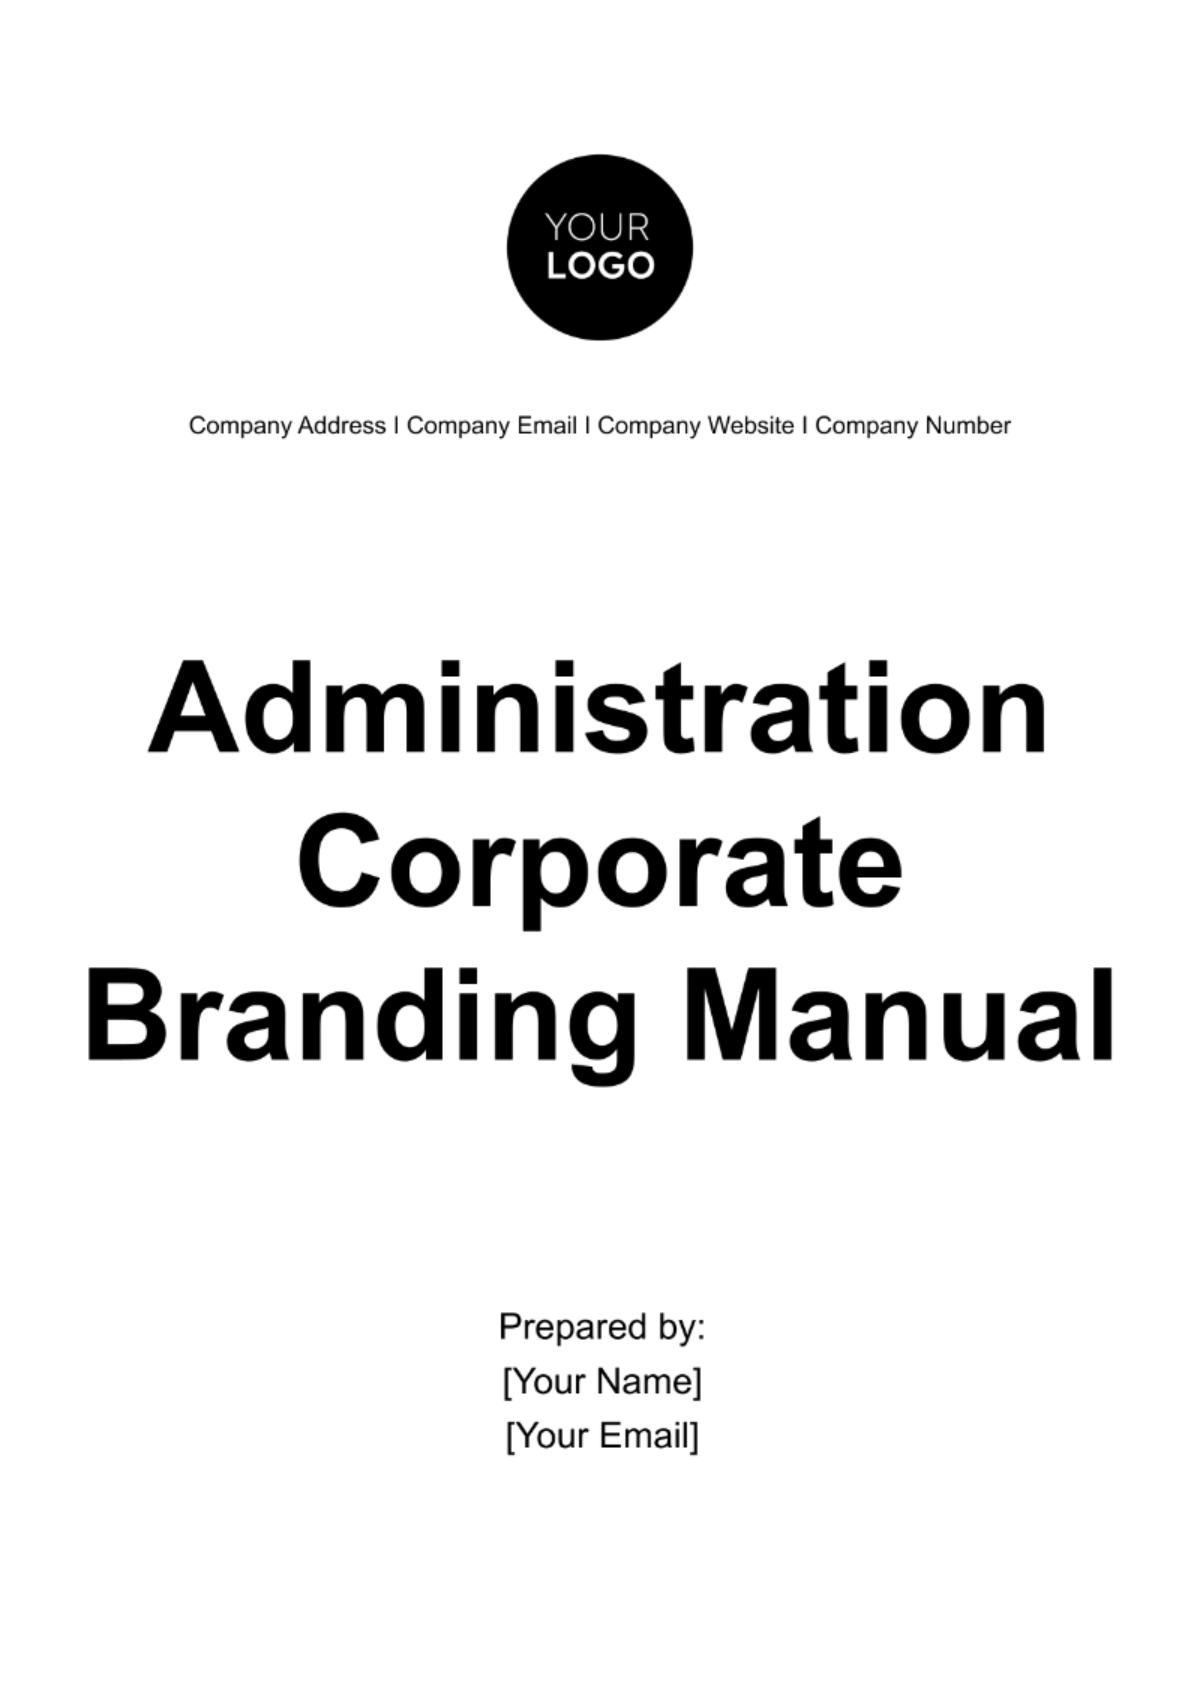 Administration Corporate Branding Manual Template